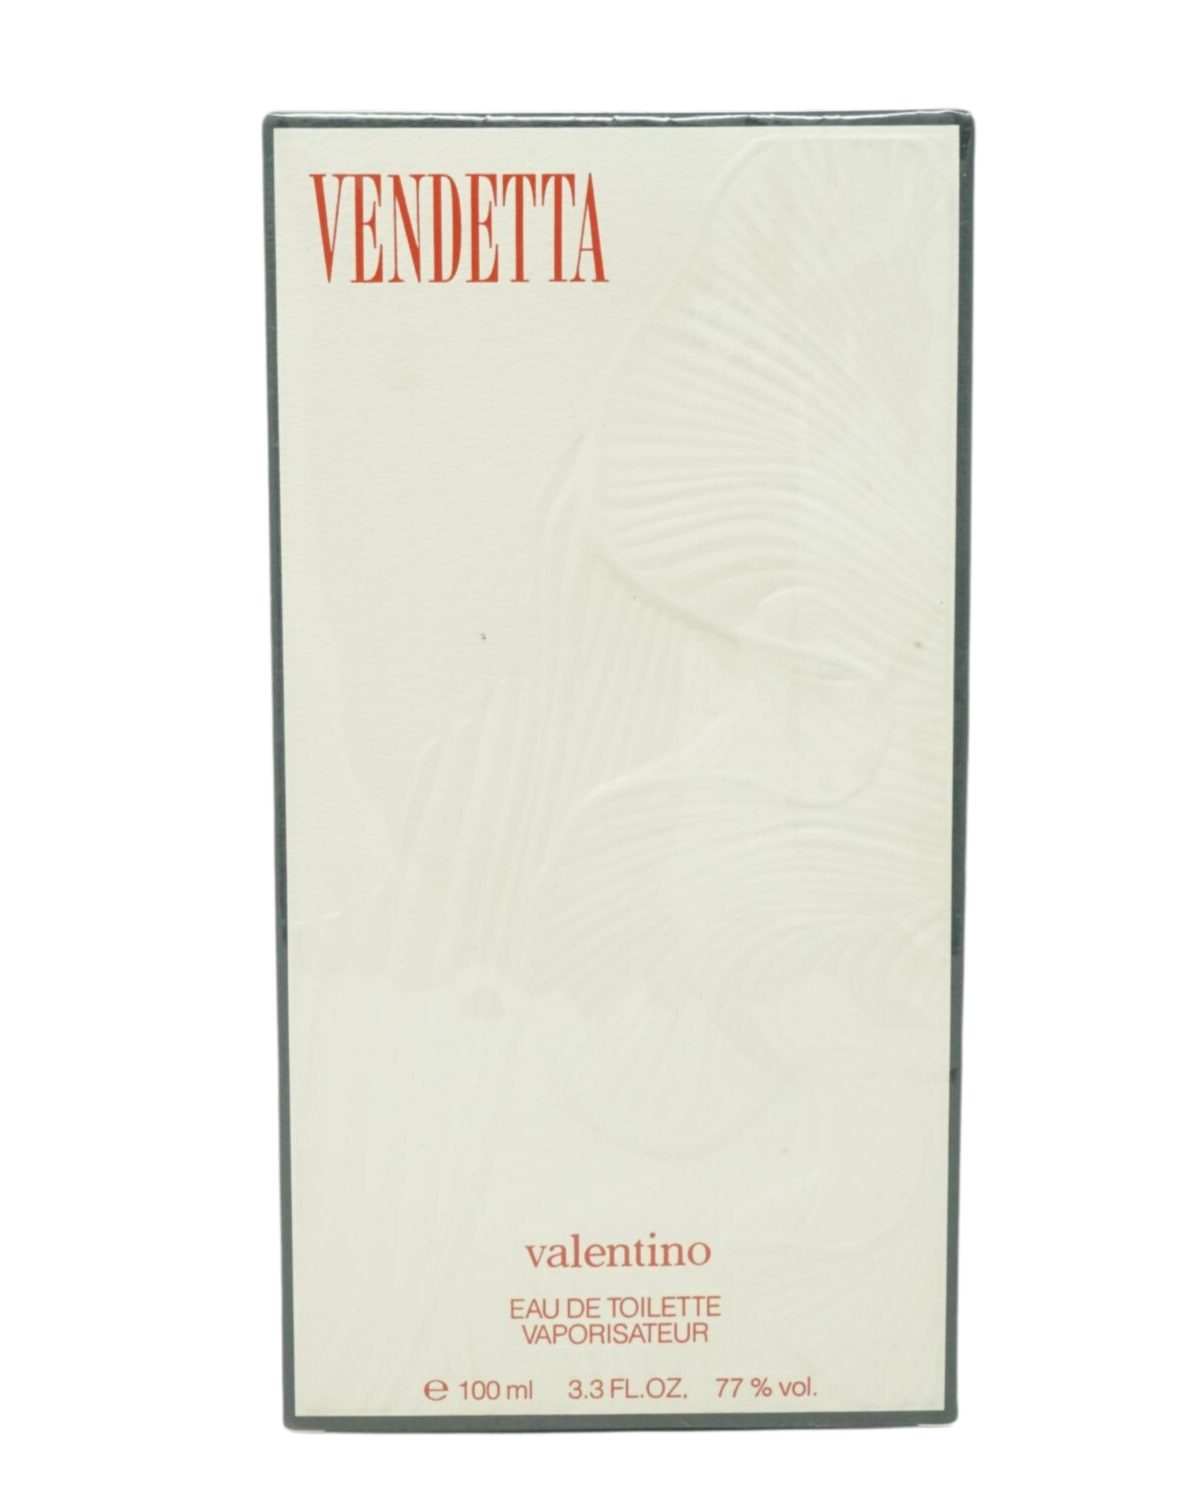 Valentino Eau Toilette Toilette Eau de 100ml de Vapo Valentino Vendetta